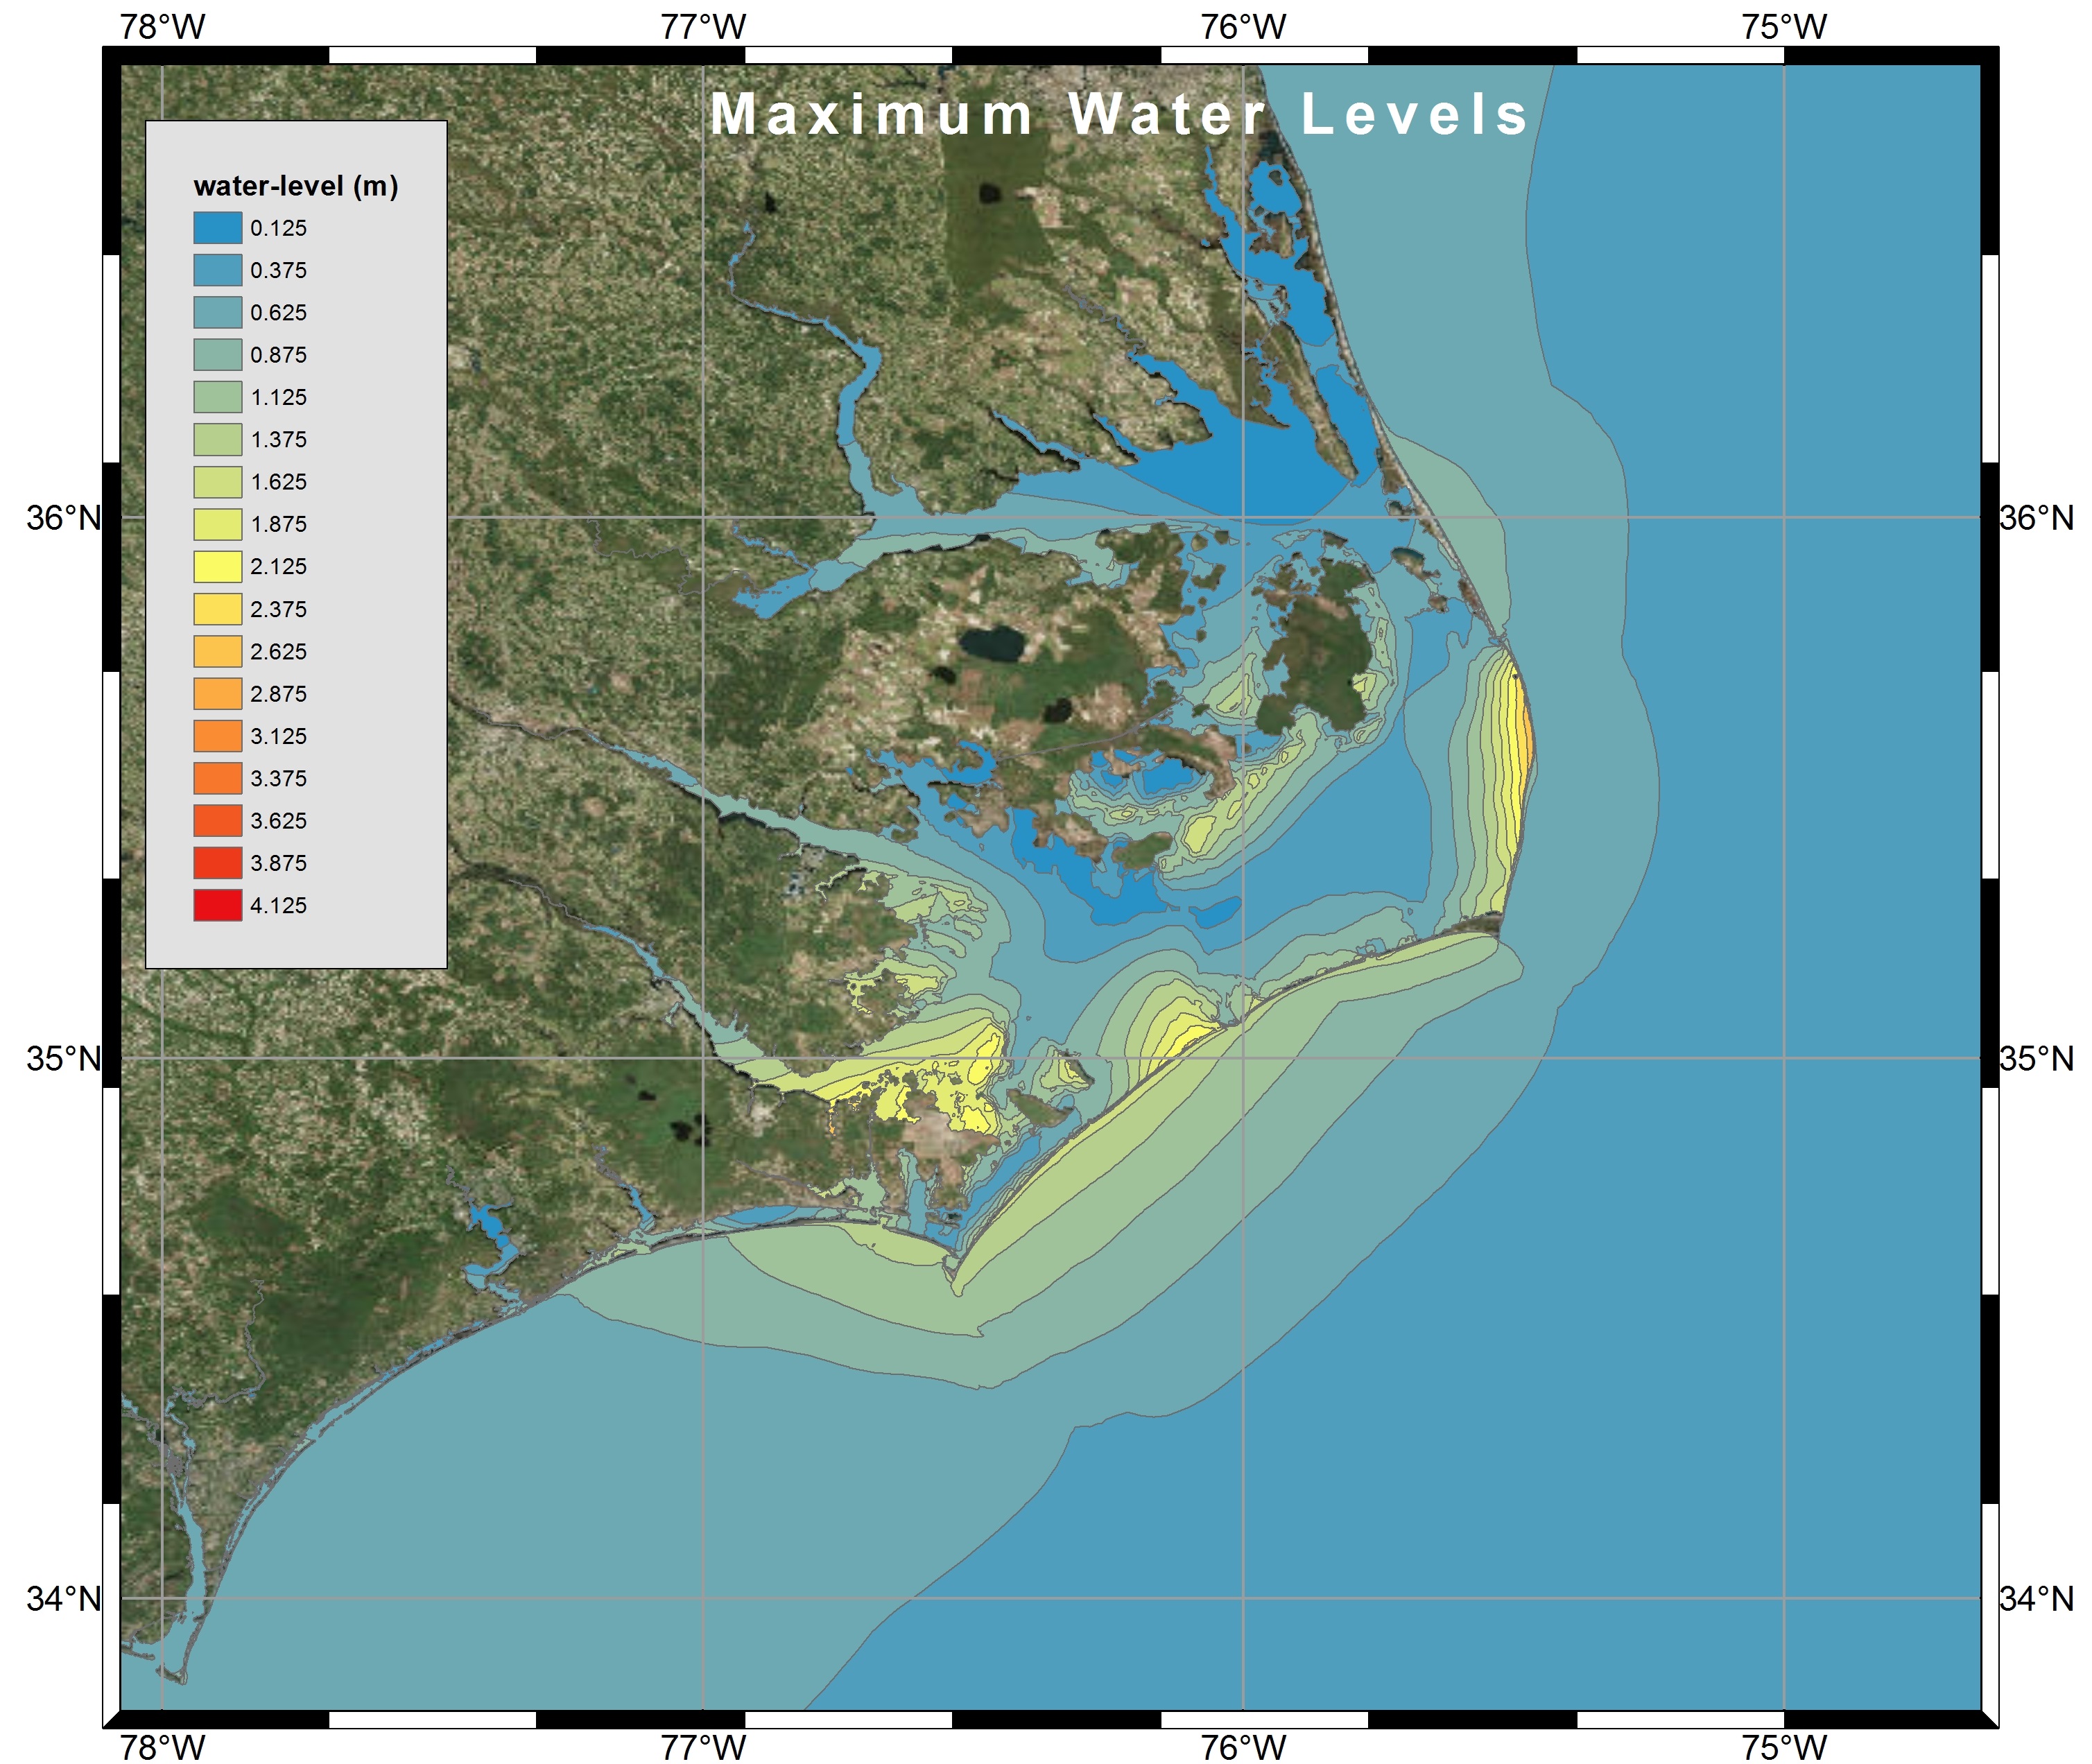 Visualization of Maximum Water Levels along the North Carolina coast during Hurricane Arthur (2014) using polygon shapefiles created by Kalpana with ArcGIS satellite imagery.